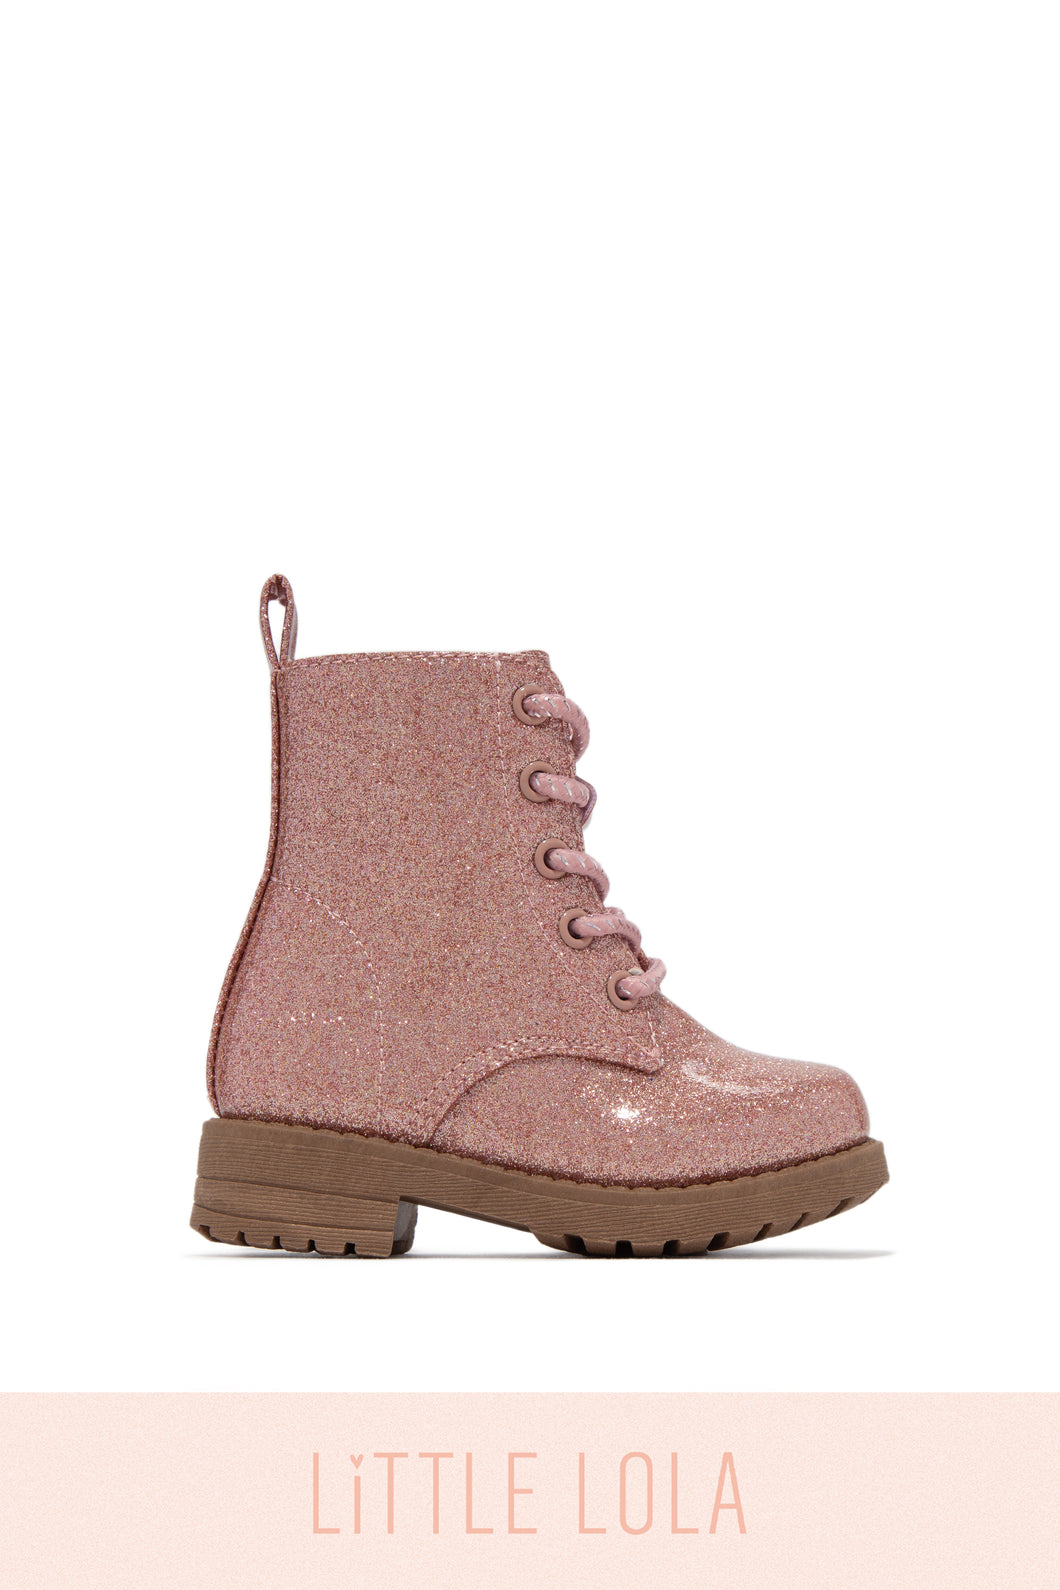 Mini Attitude Kids Glitter Lace Up Combat Boots - Pink